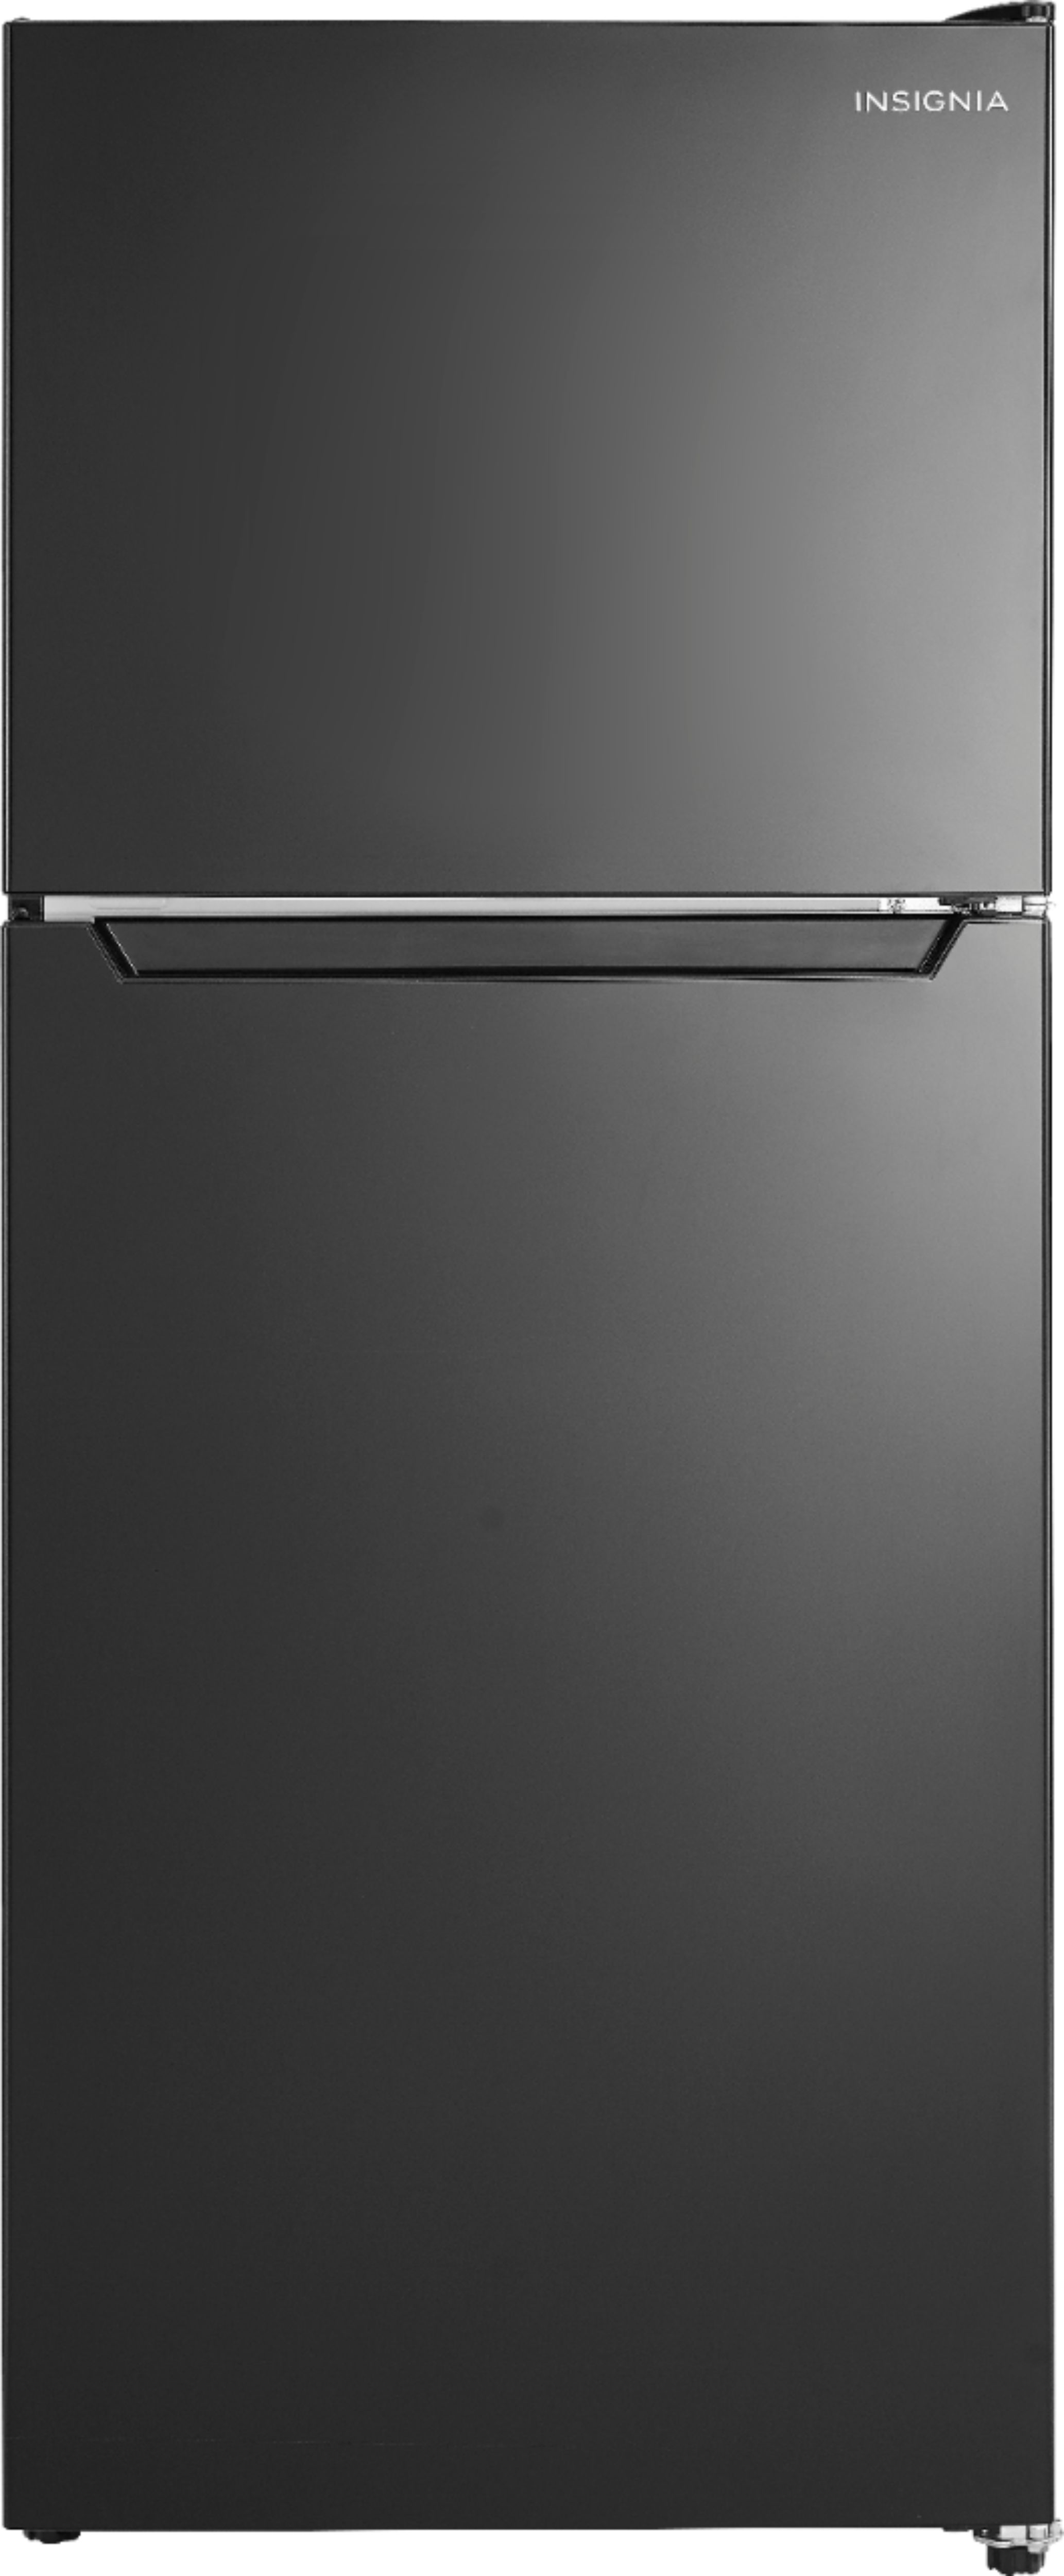 31+ Insignia fridge handle installation ideas in 2021 